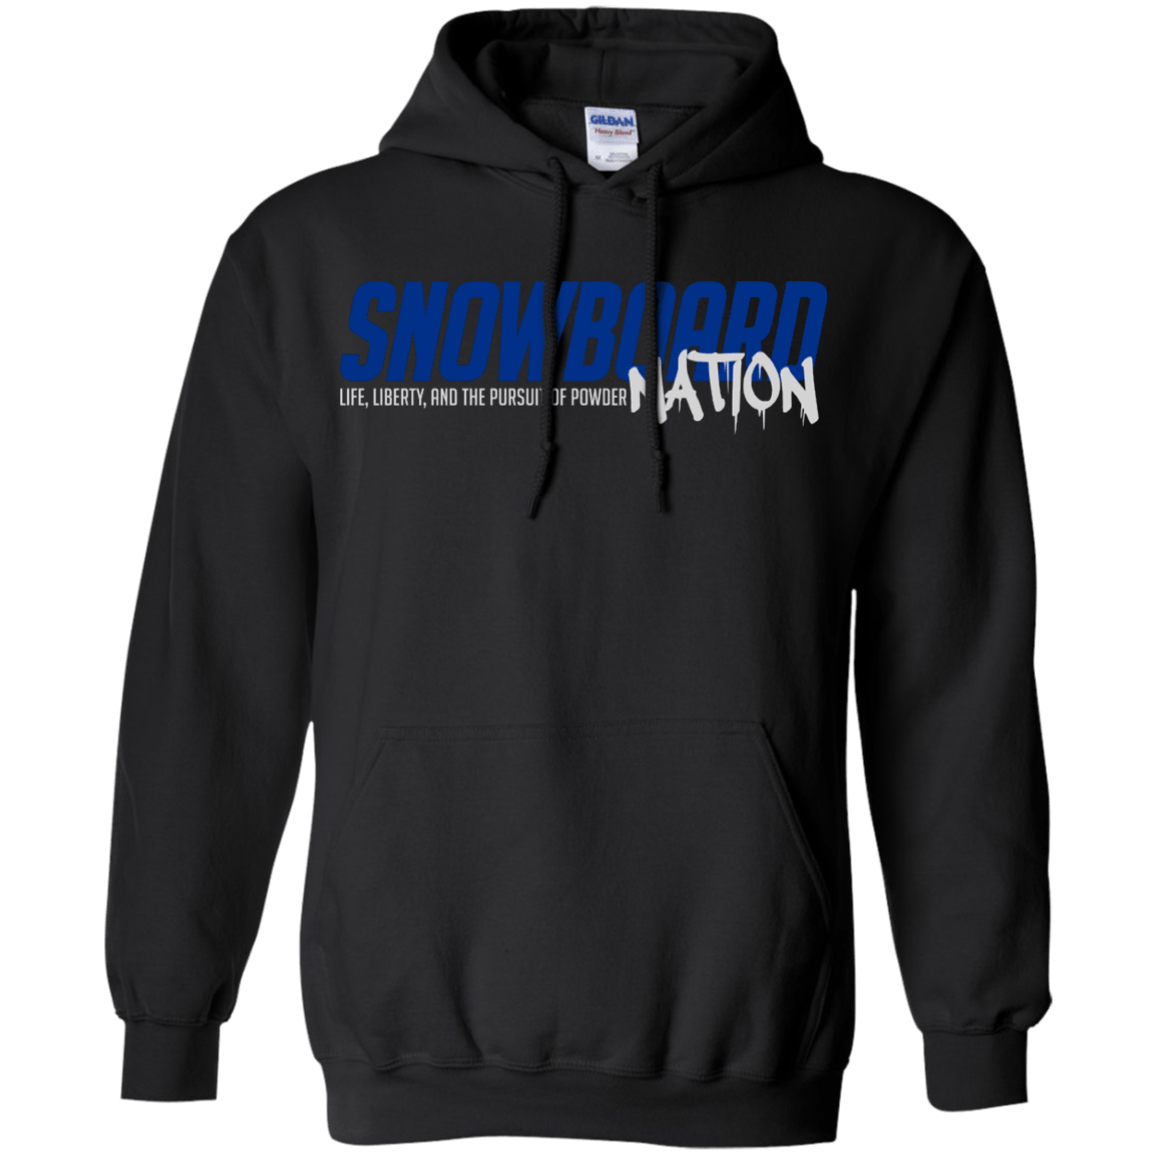 Snowboard Nation (Blue) Hoodies - Powderaddicts